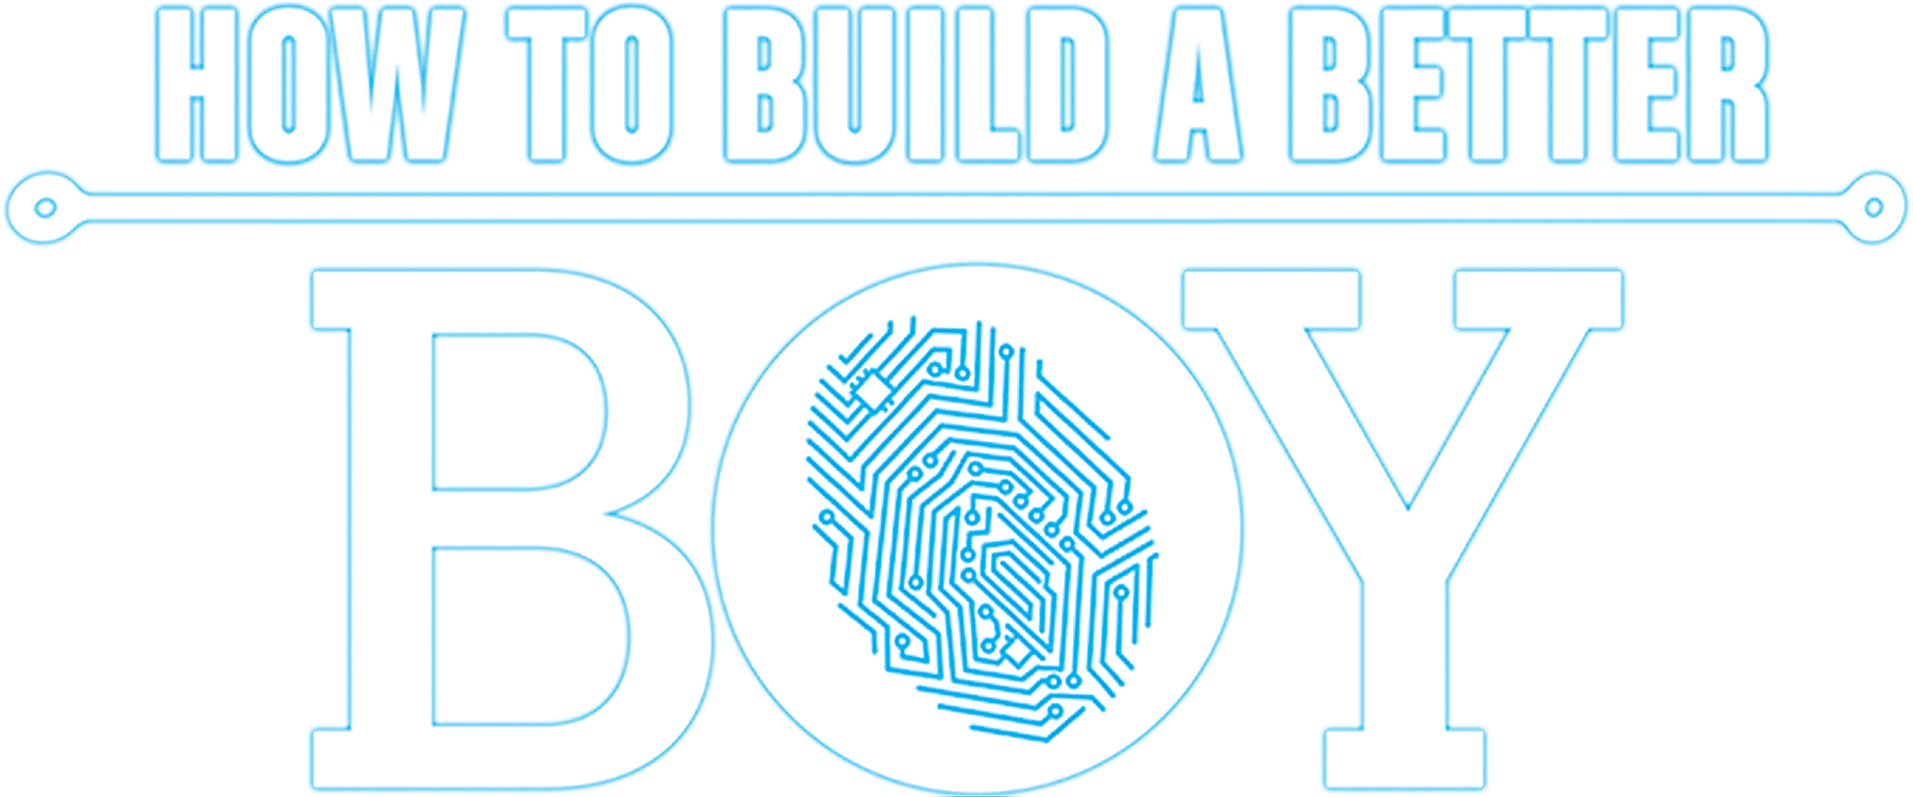 How to Build a Better Boy logo